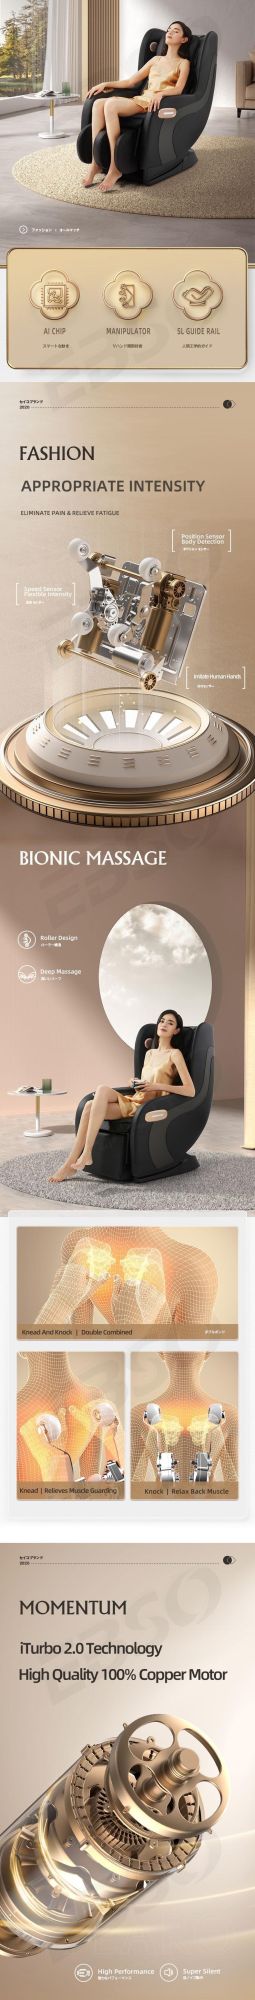 Zyk SL Guide Rail Zero Gravity Full Body Massage Chair Multifunctional Massage Chair for The Elderly